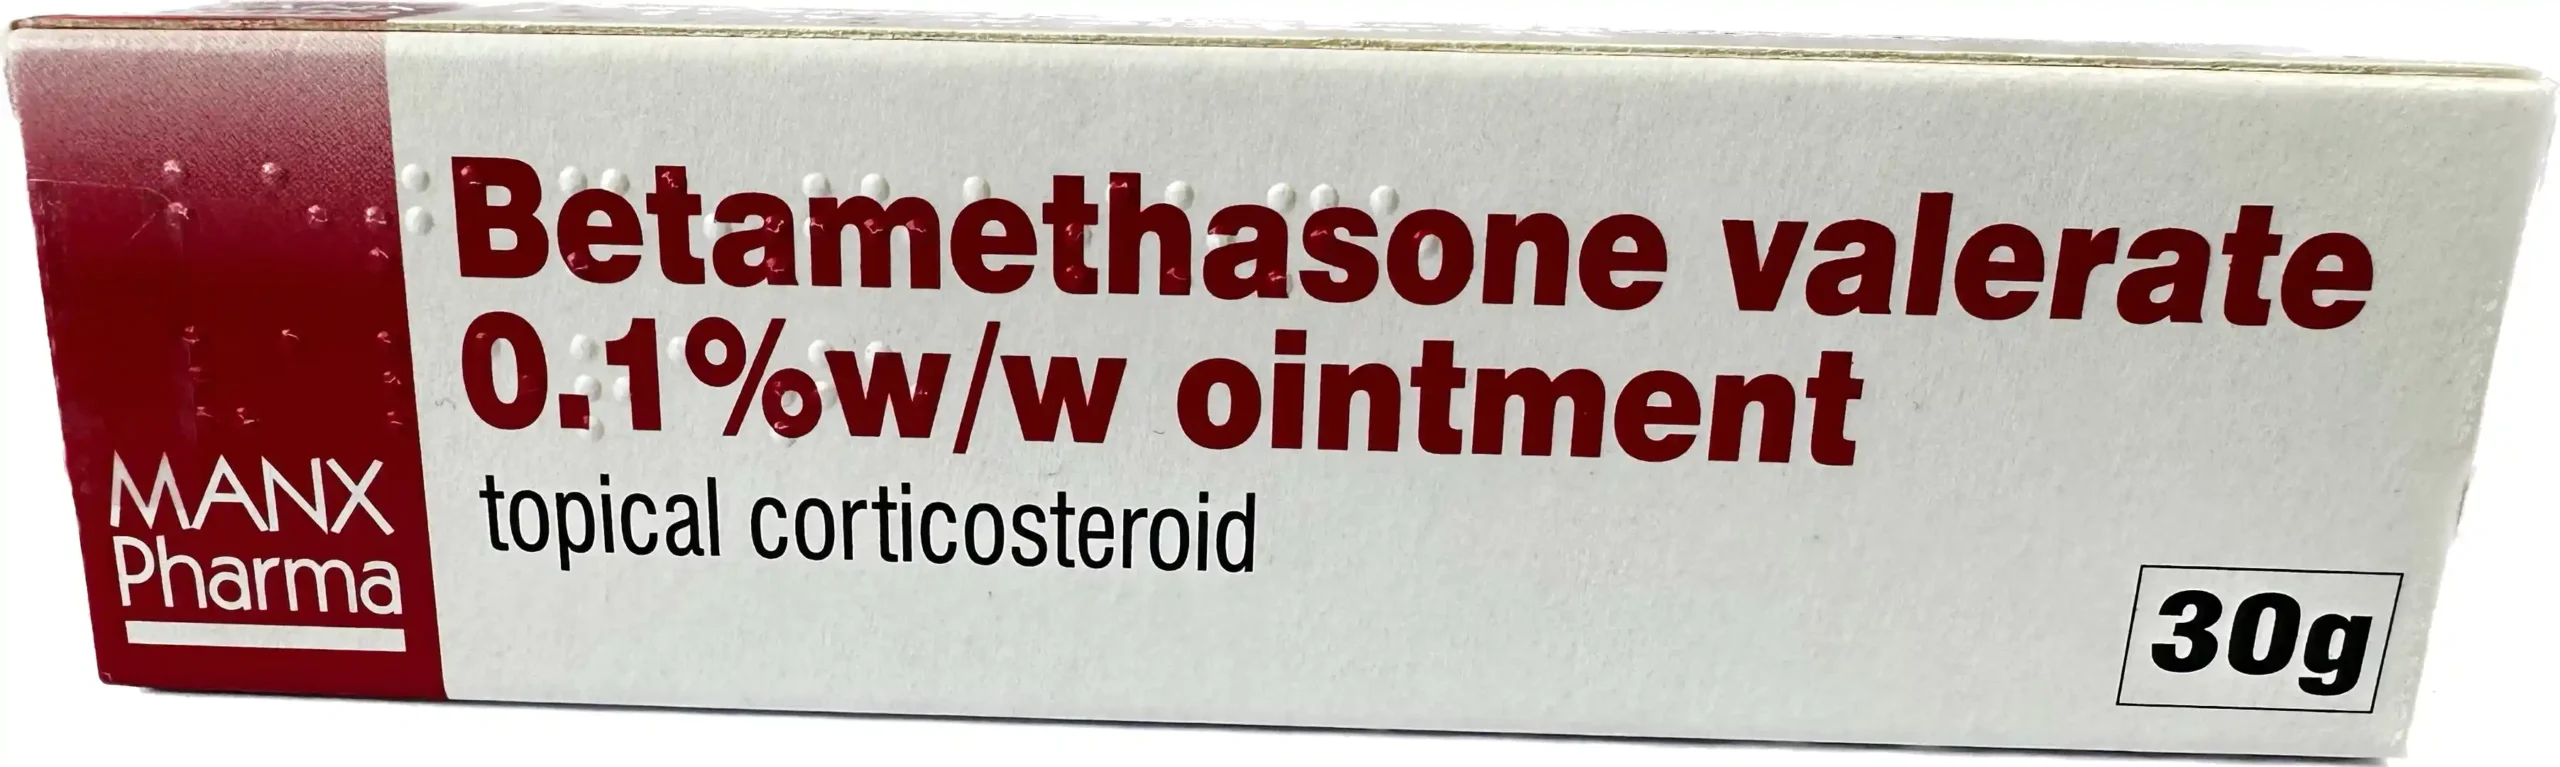 Betamethasone Valerate ointment